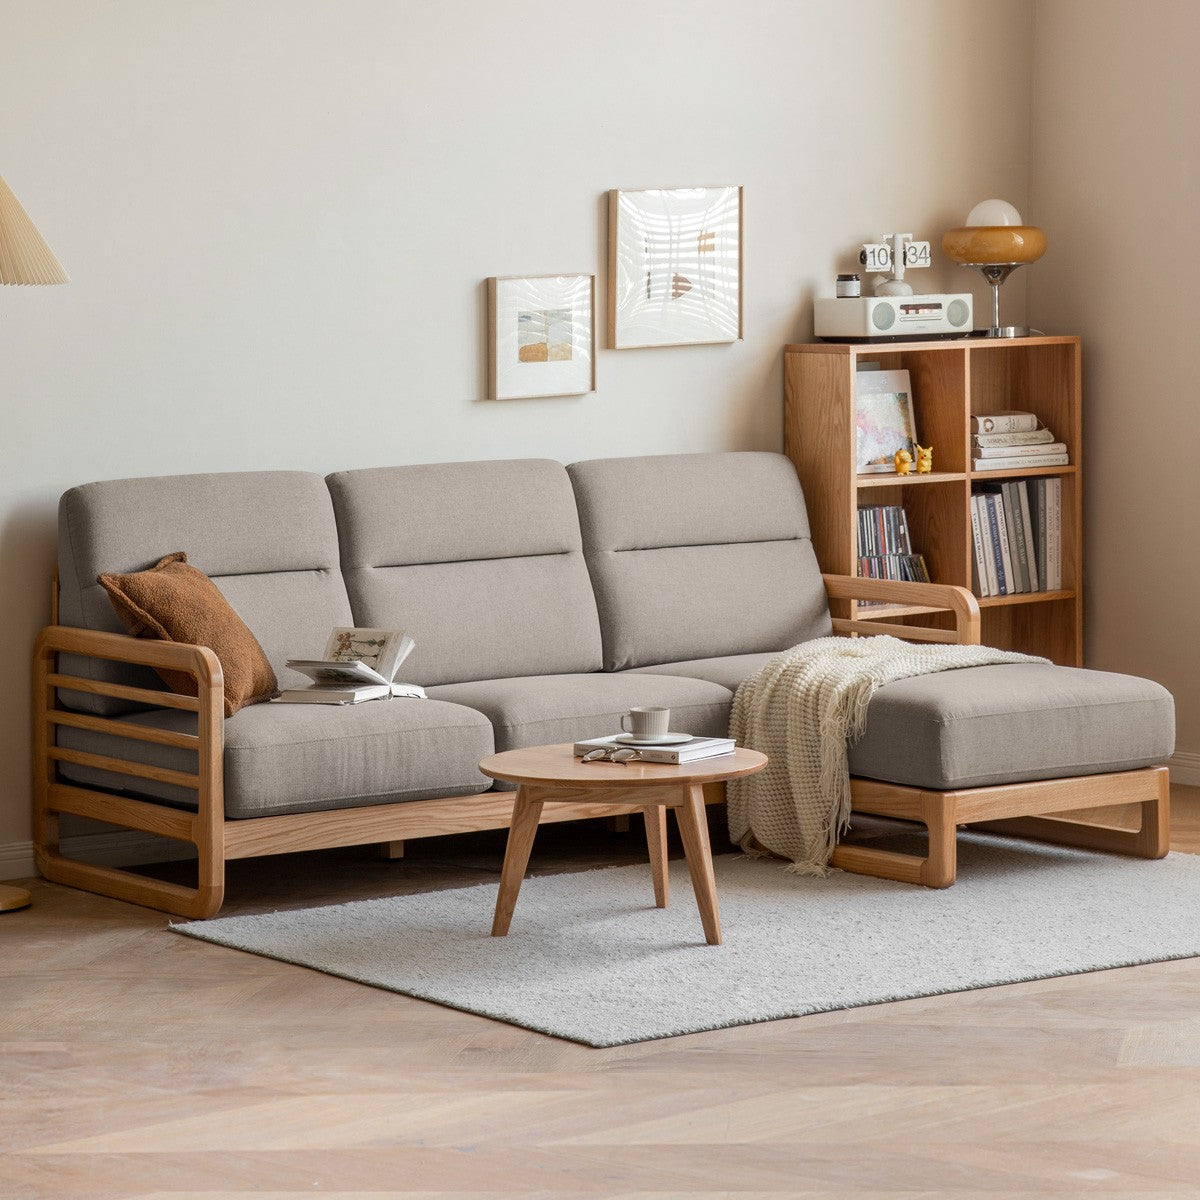 Oak wood fabric sofa string-style backrest)